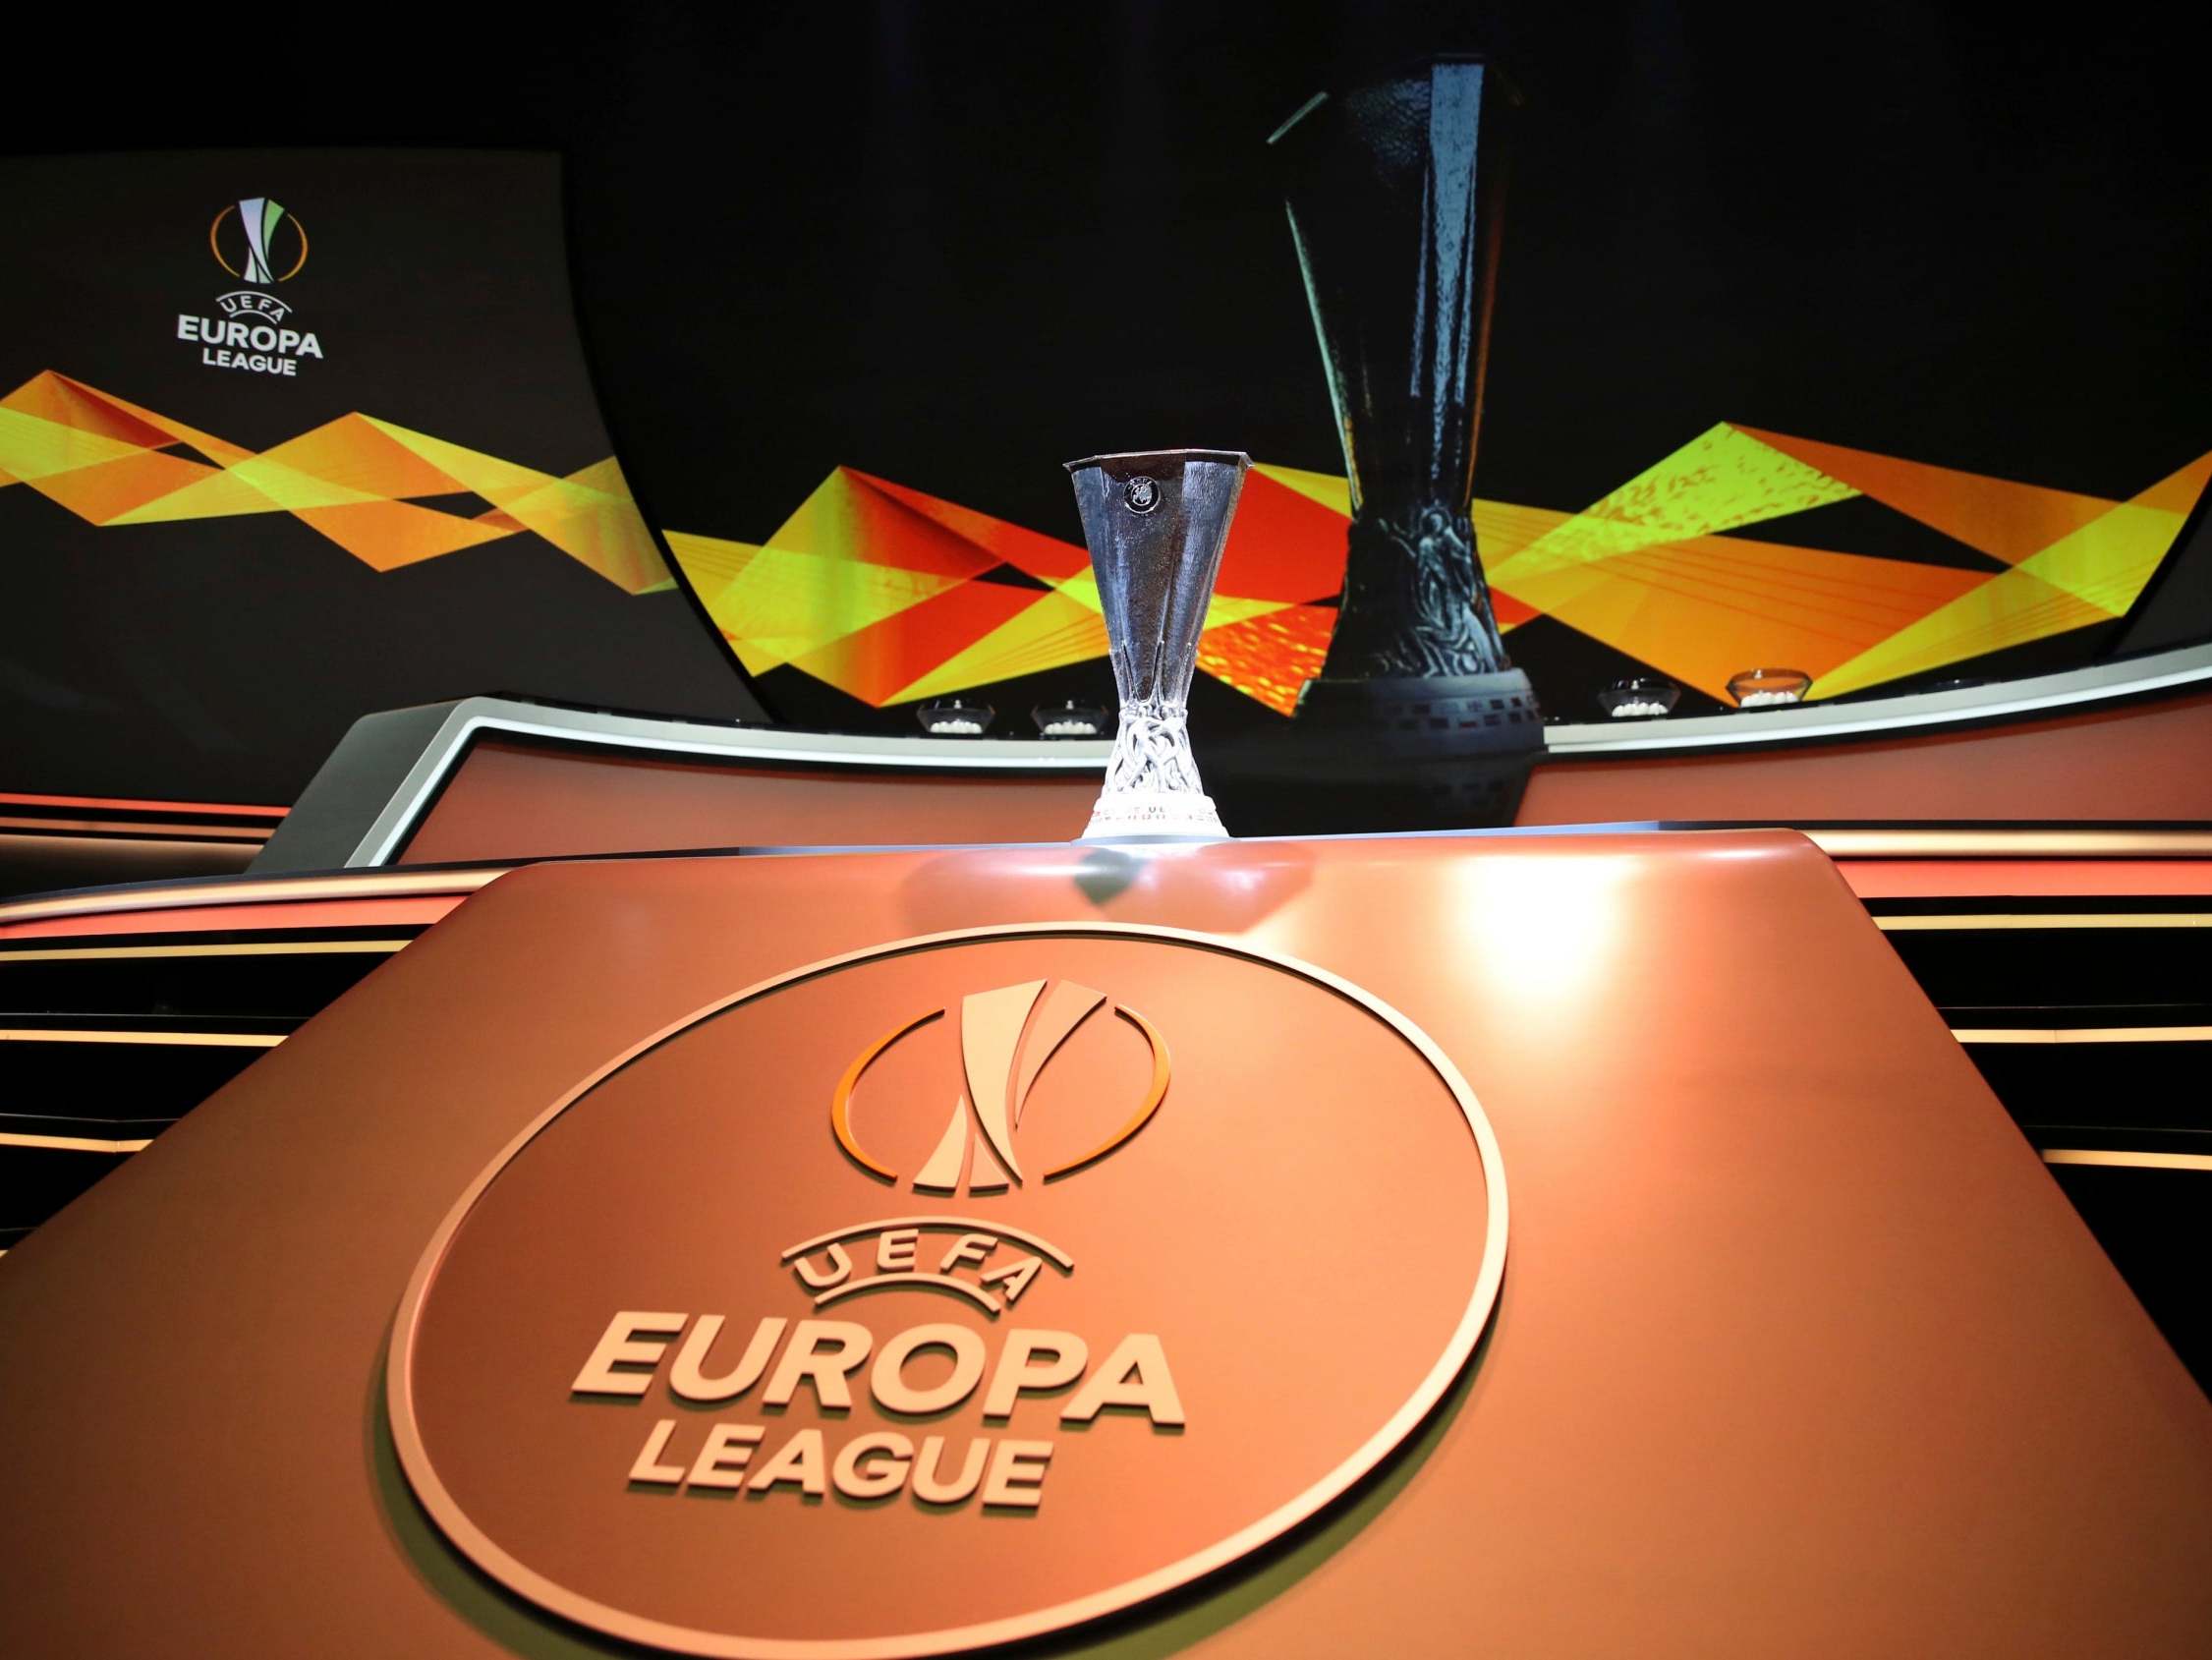 Europa League Draw Group 2019